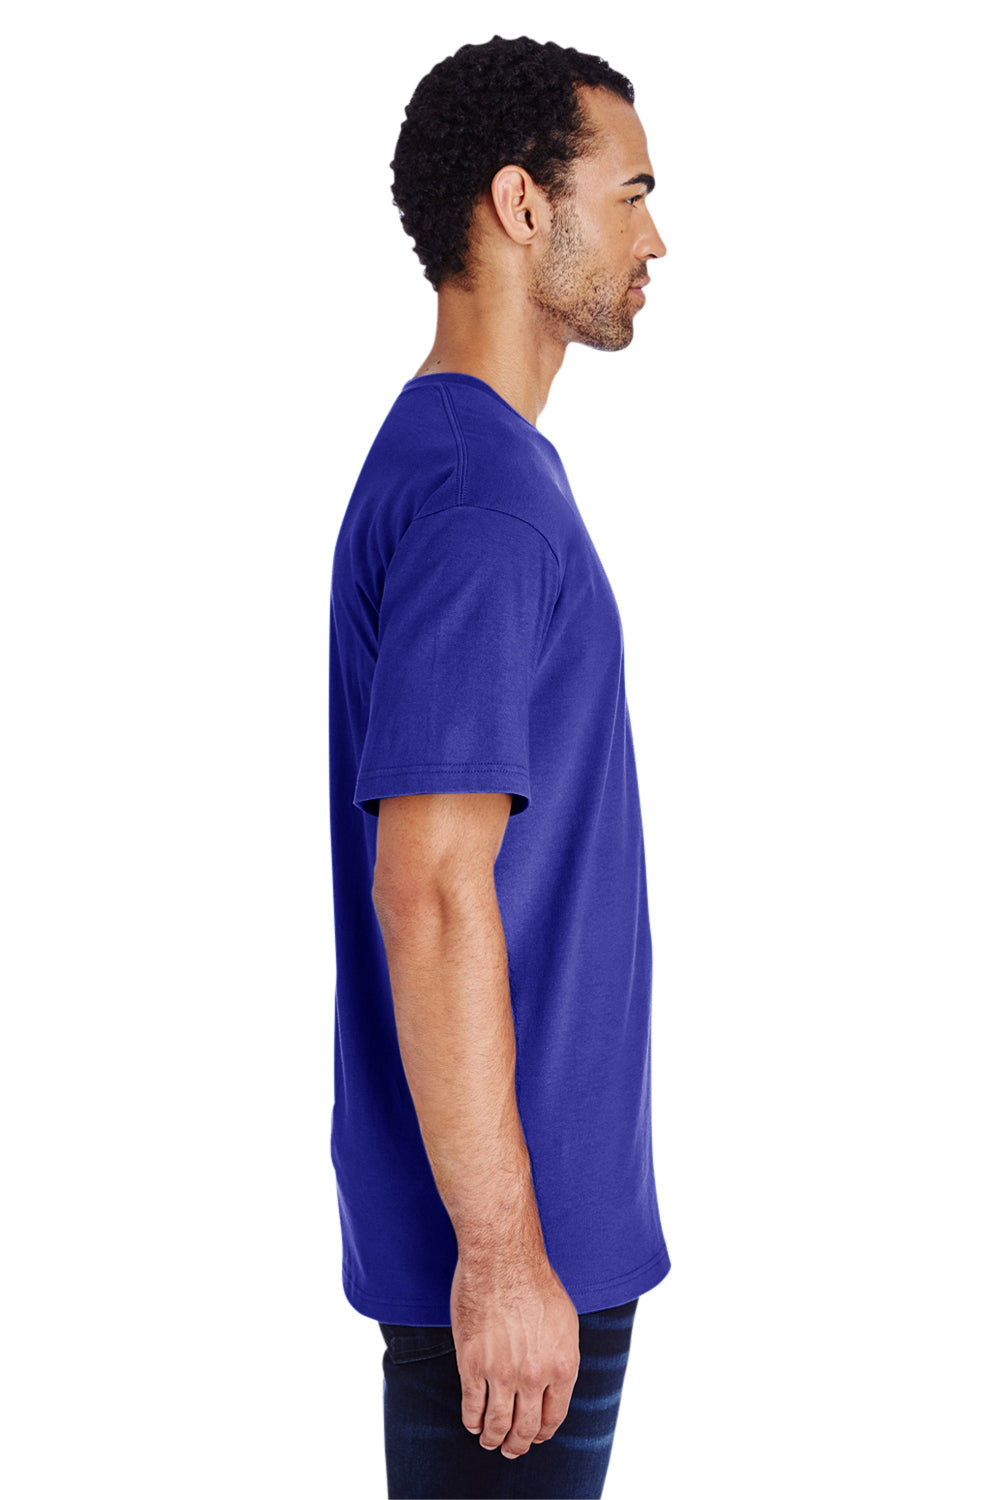 Gildan H000 Mens Hammer Short Sleeve Crewneck T-Shirt Royal Blue Side